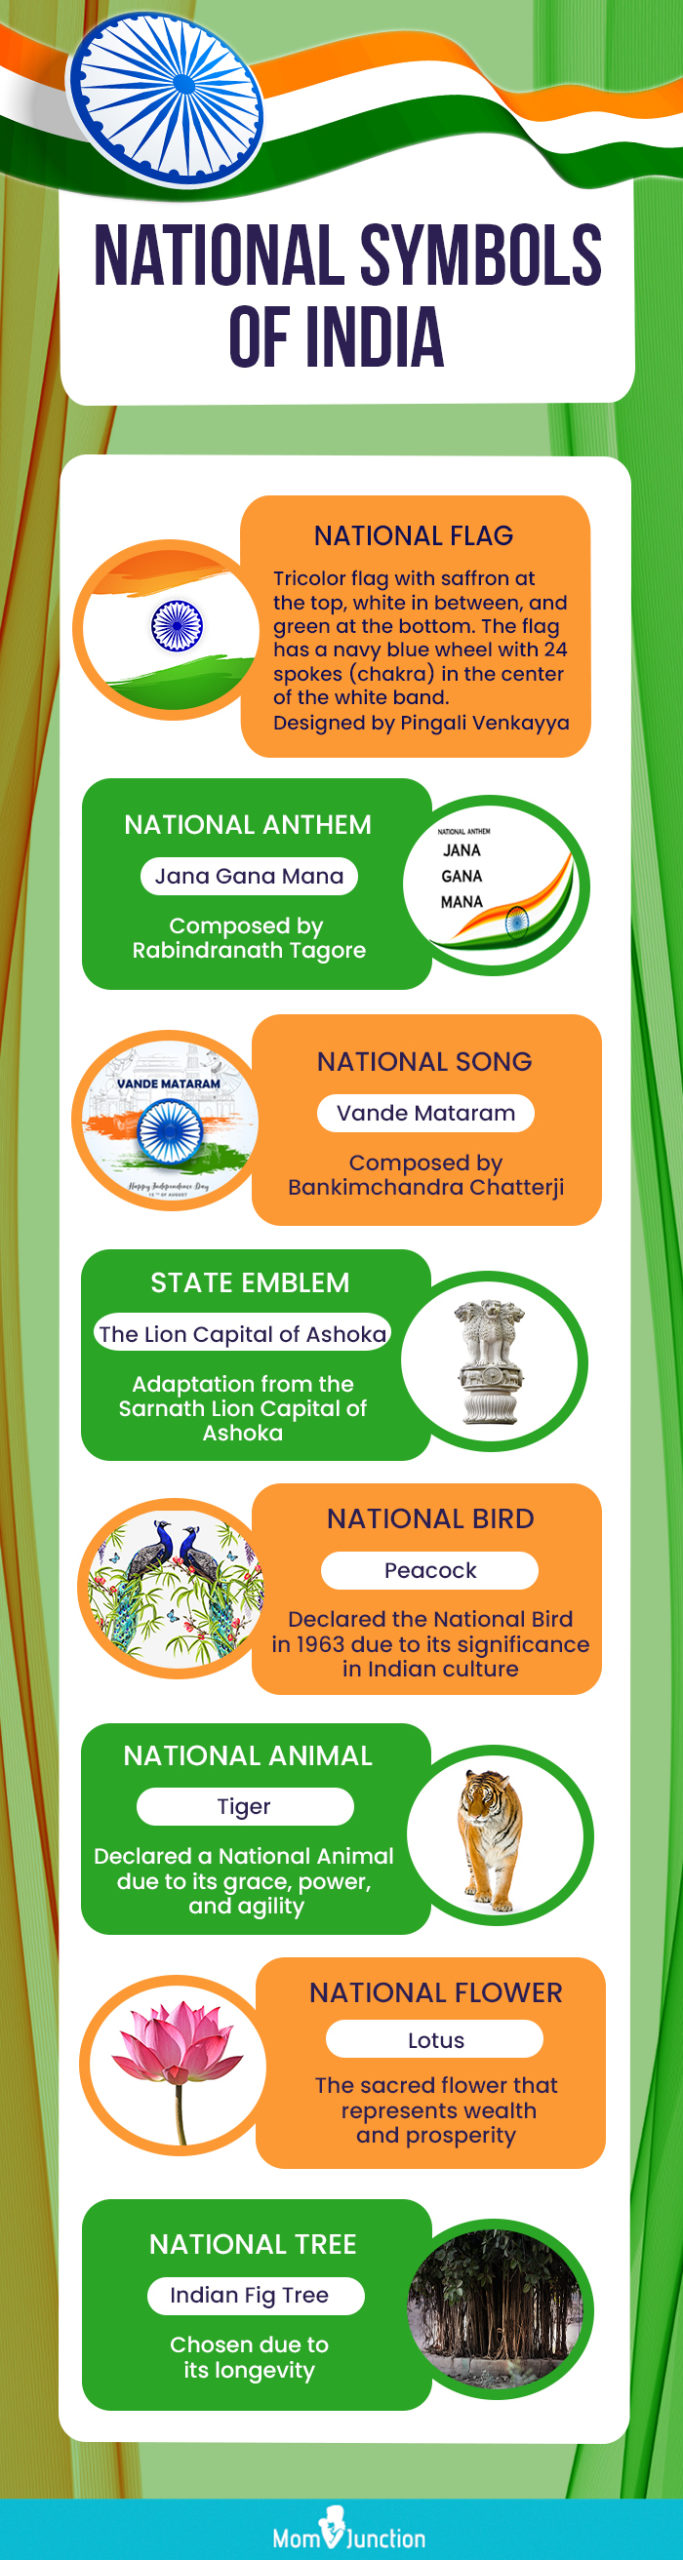 national symbols of india (infographic)